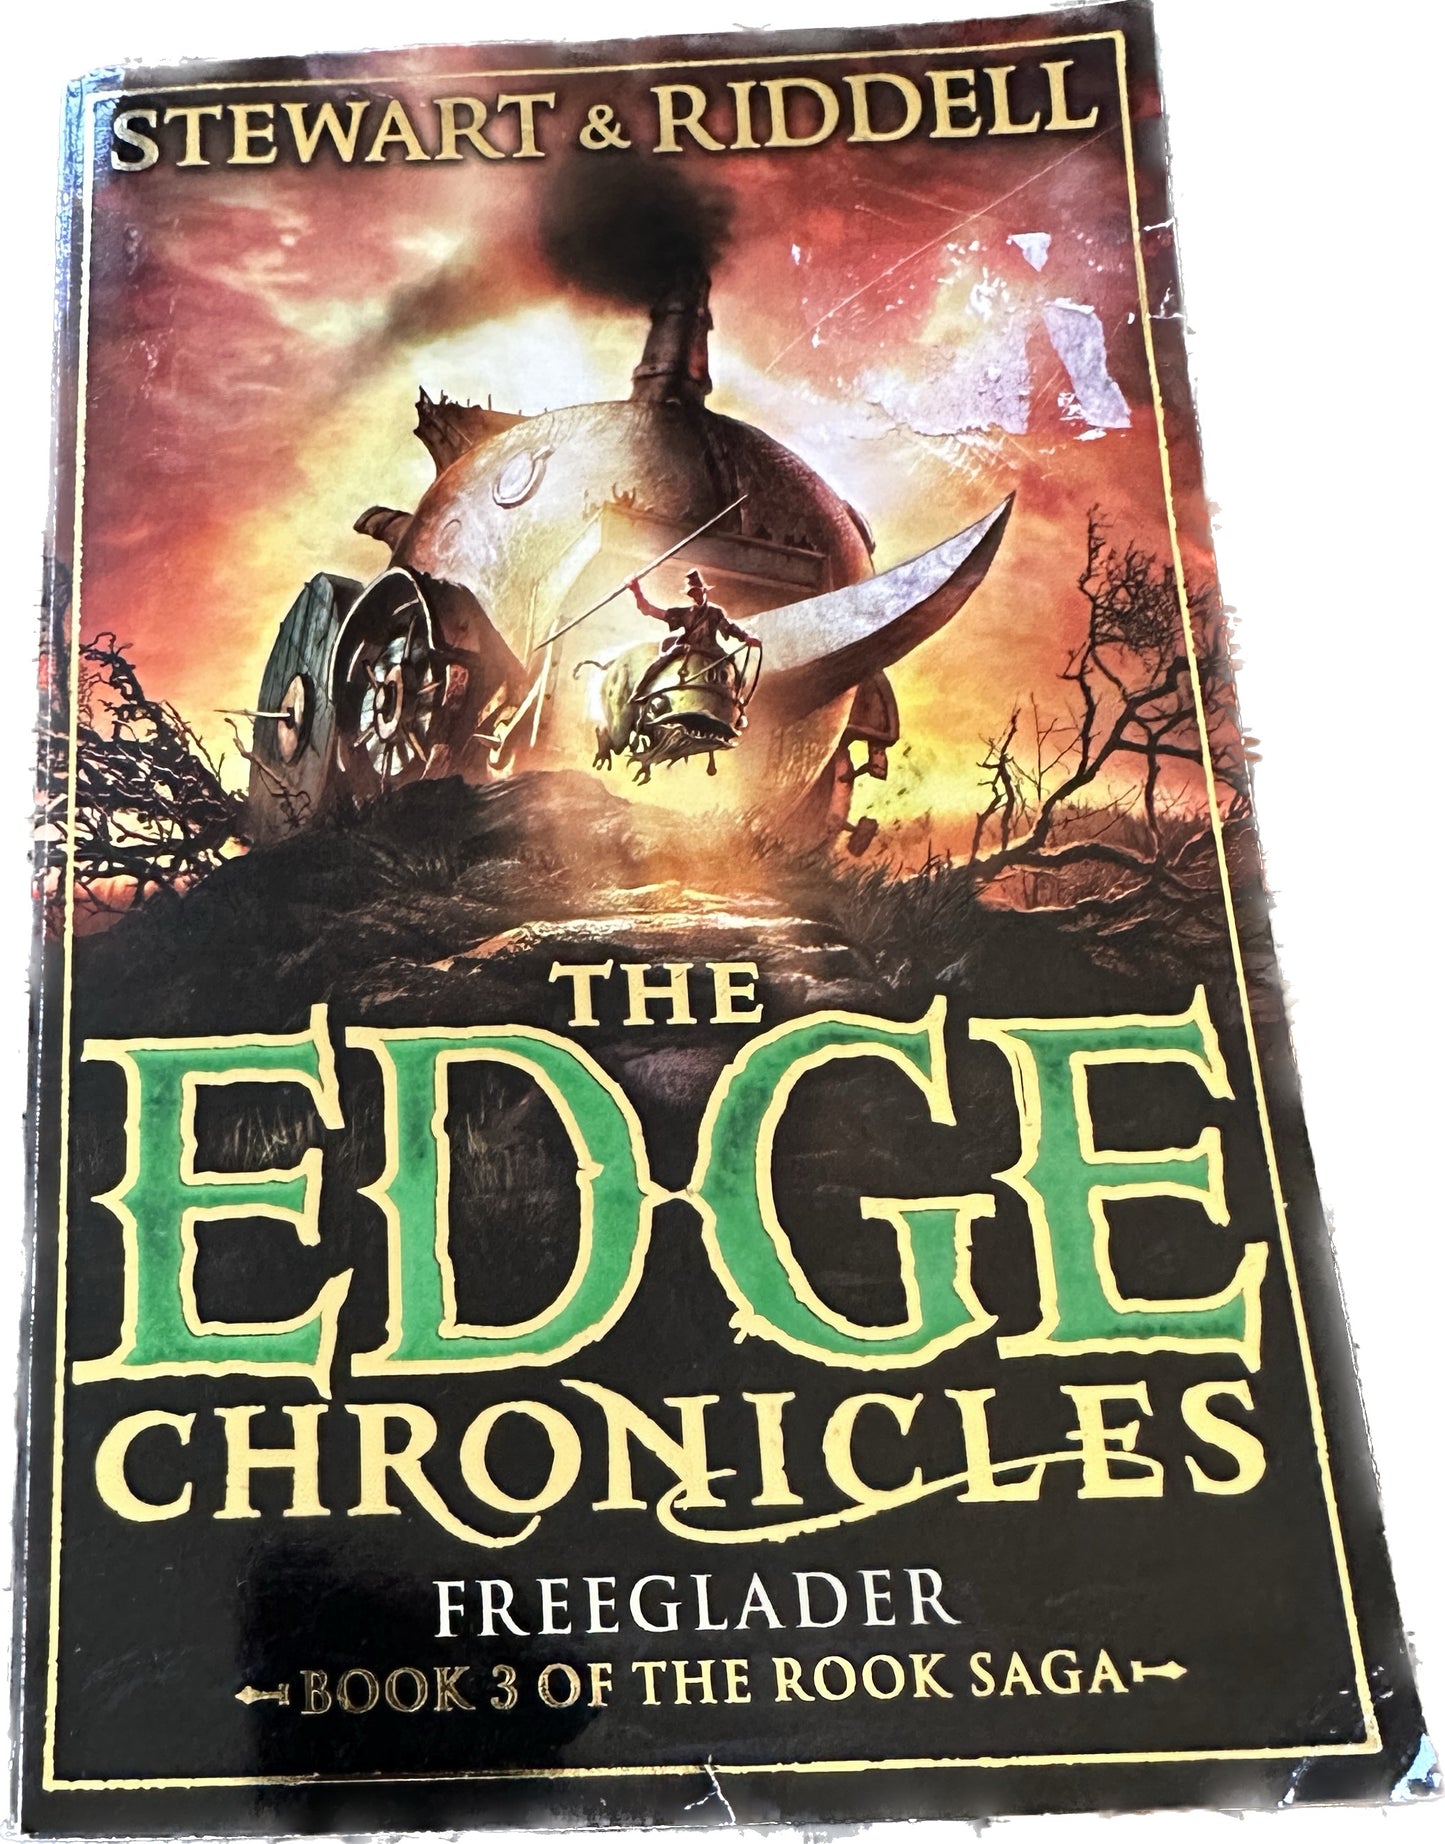 FREEGLADER The Edge Chronicles